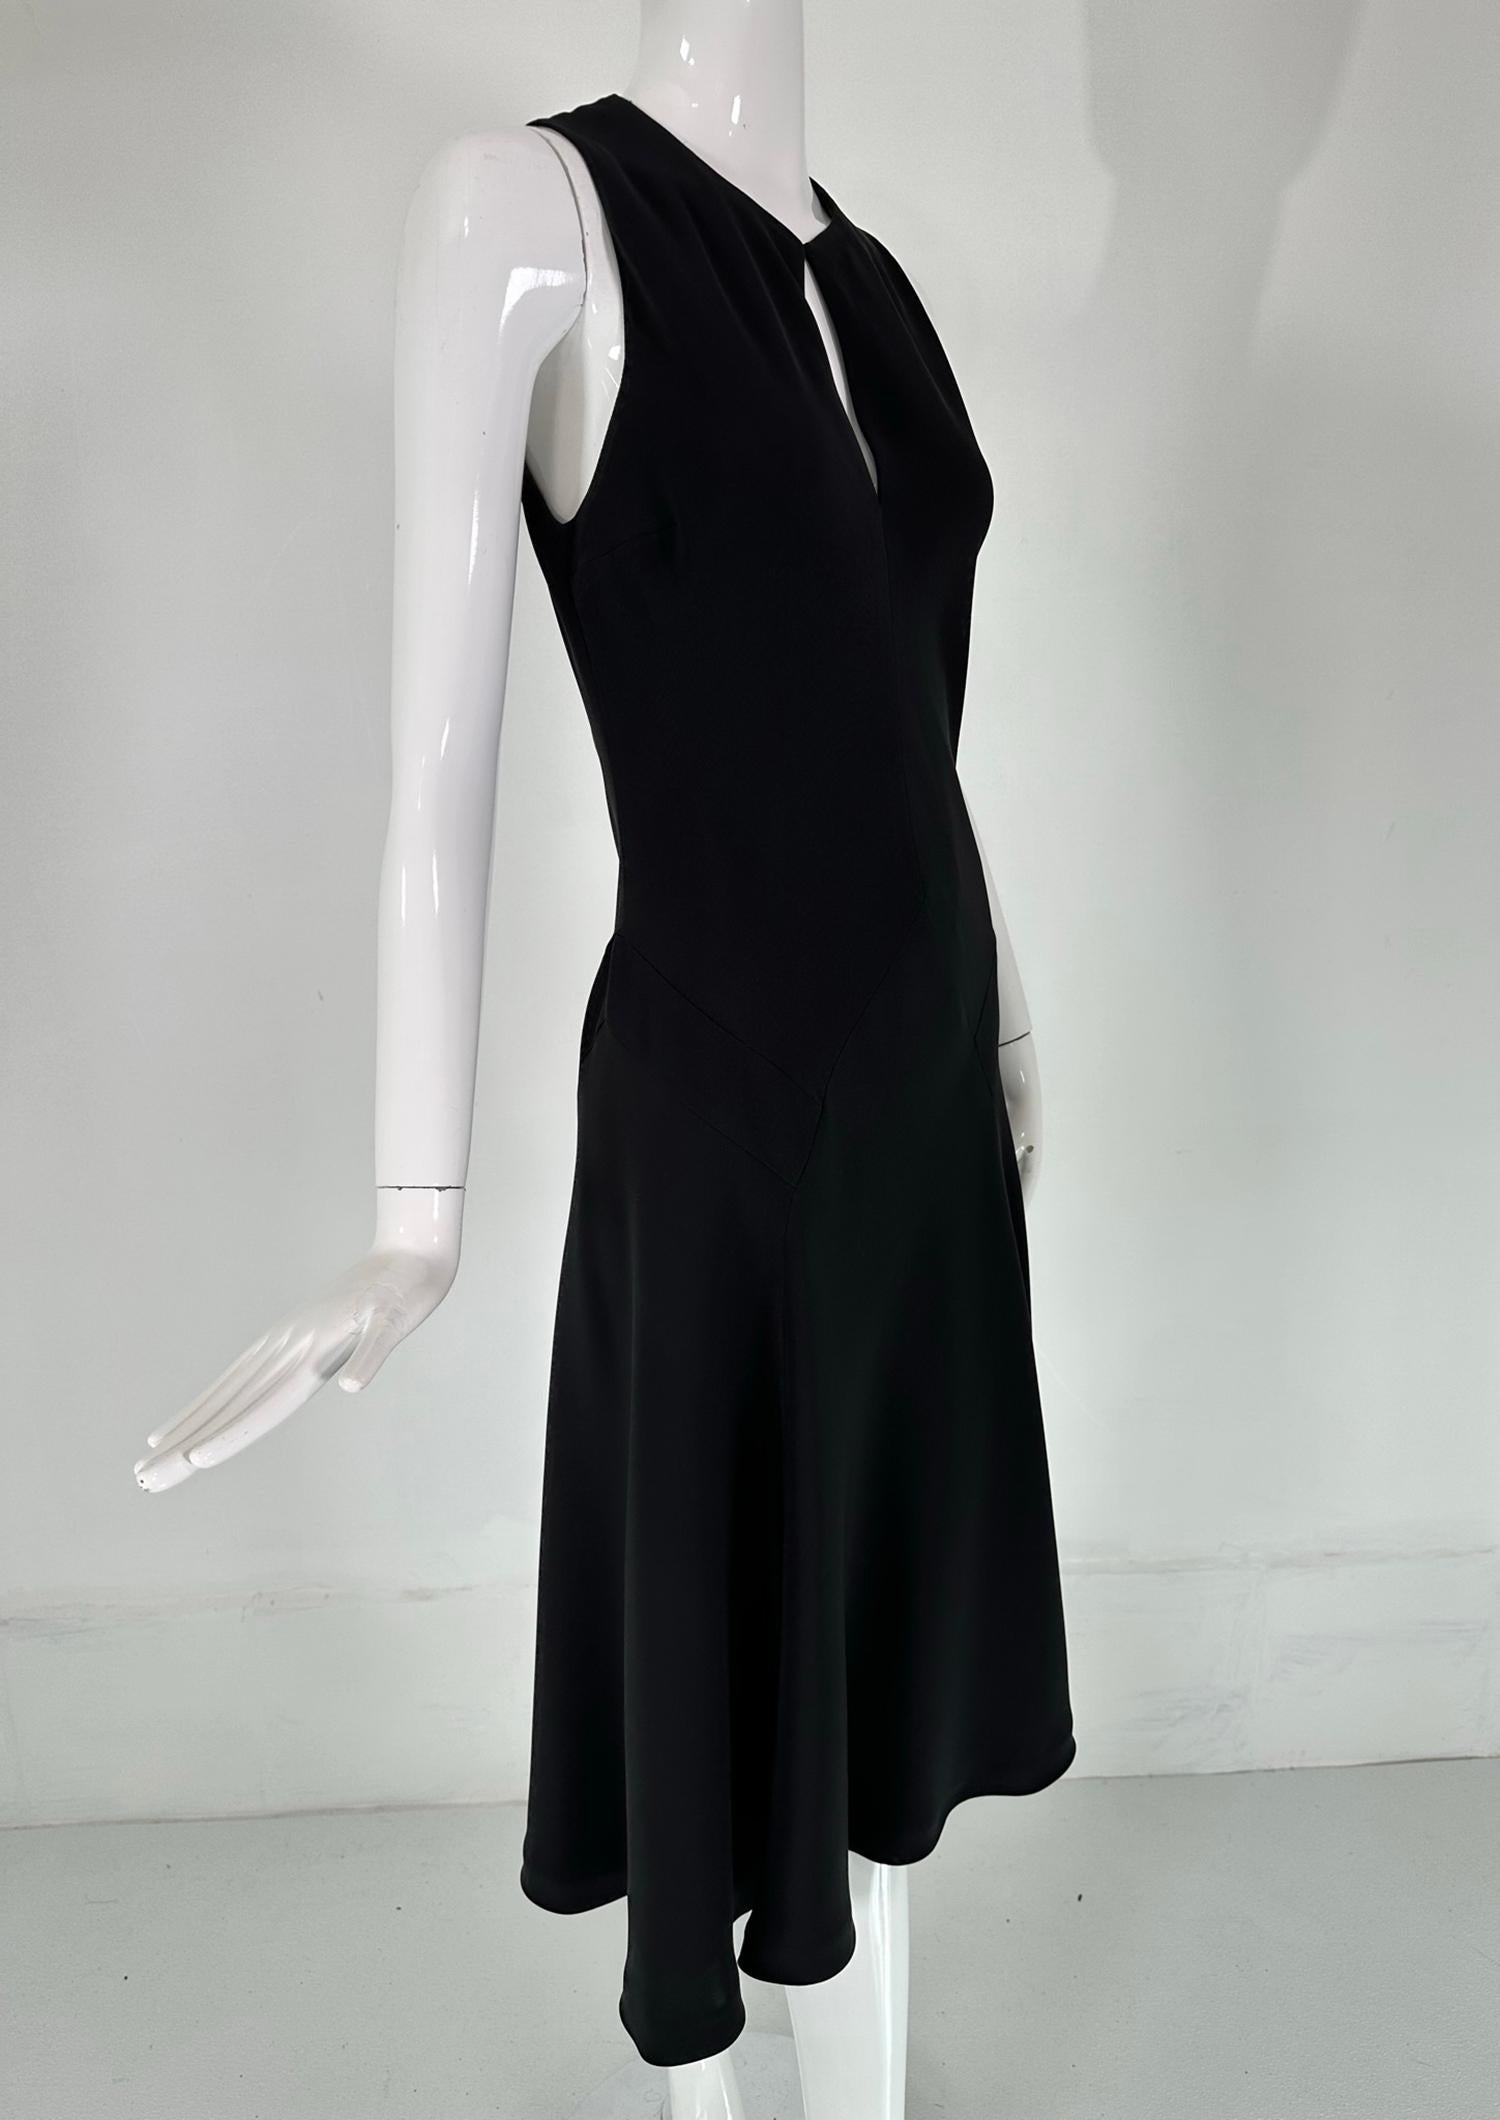 Ralph Lauren Black Label Classic Silk Bias Cut Dress 8 In Good Condition For Sale In West Palm Beach, FL